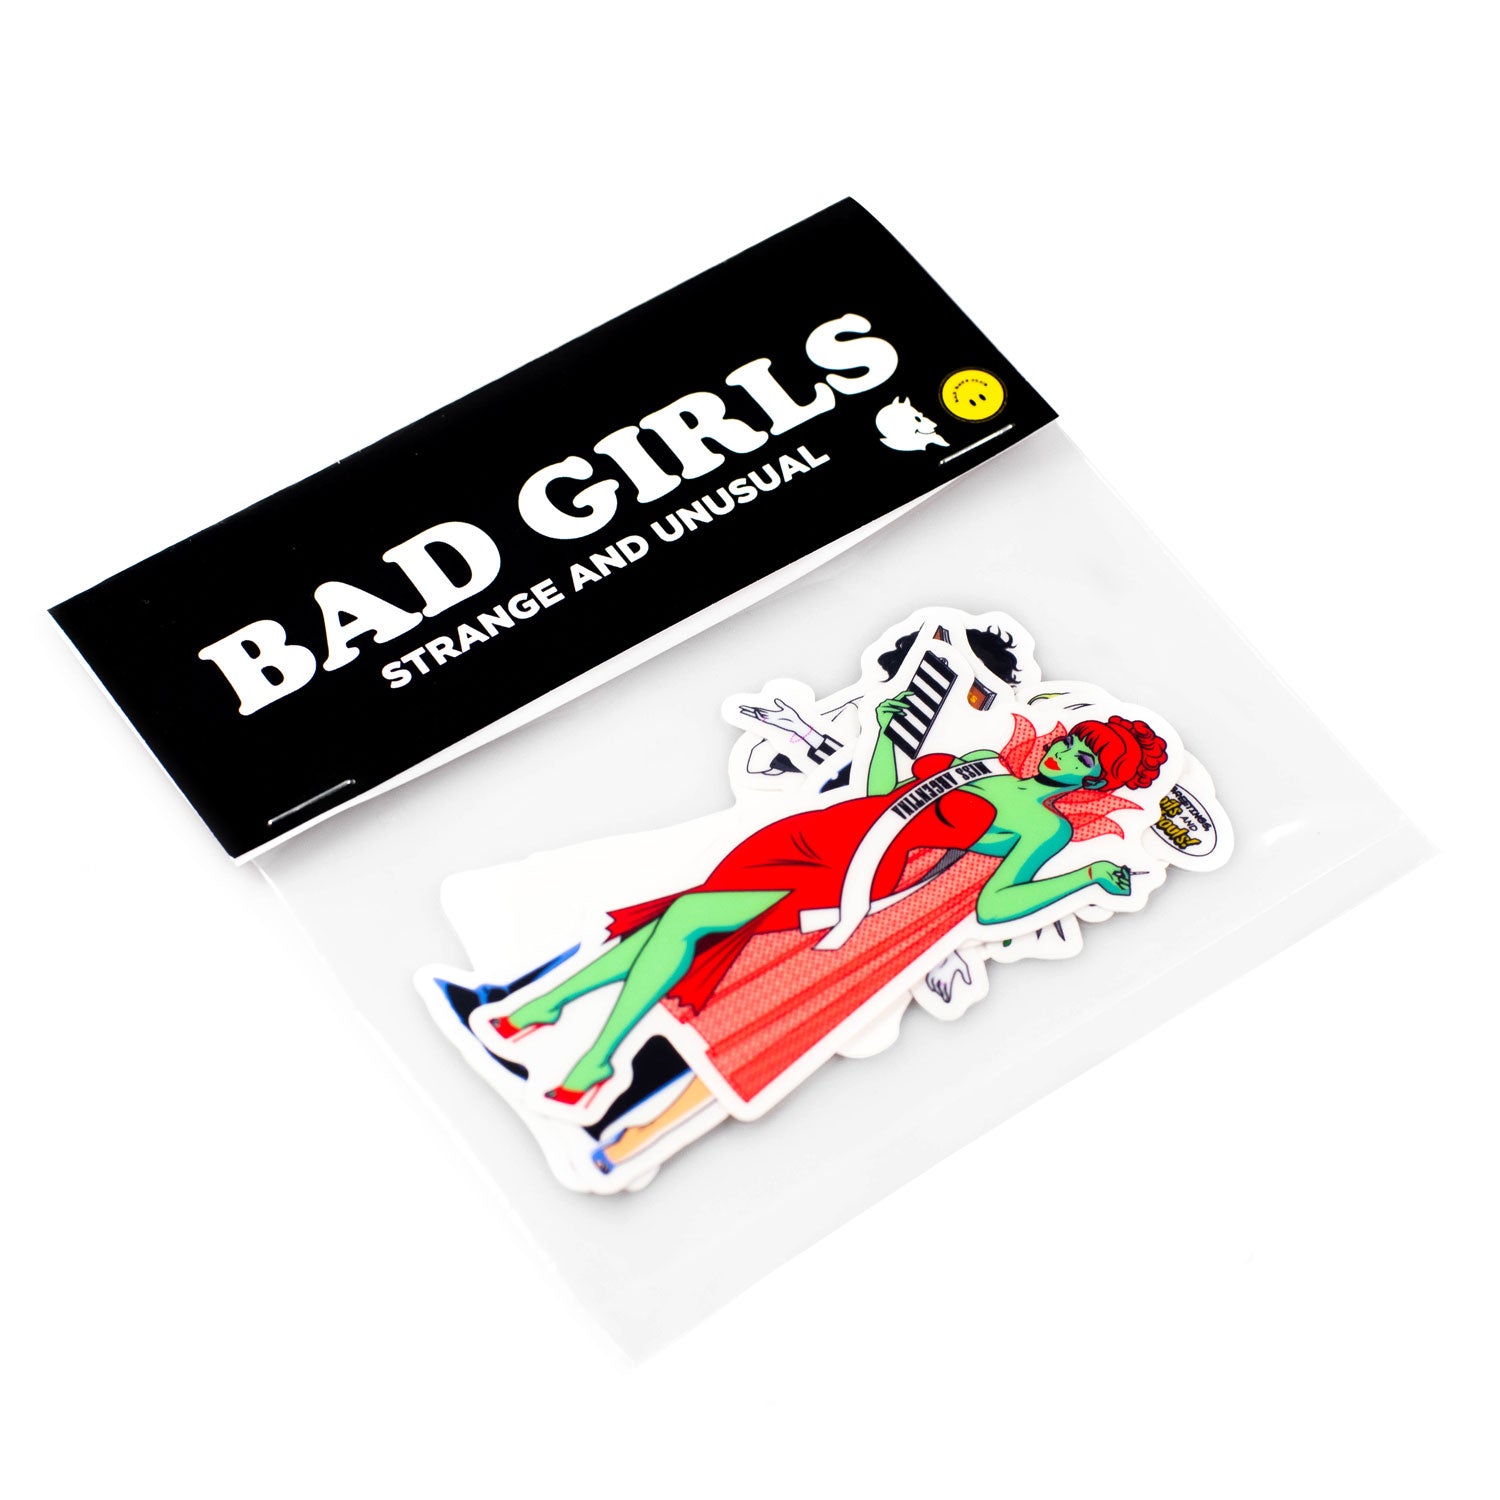 Bad Girls - Strange and Unusual